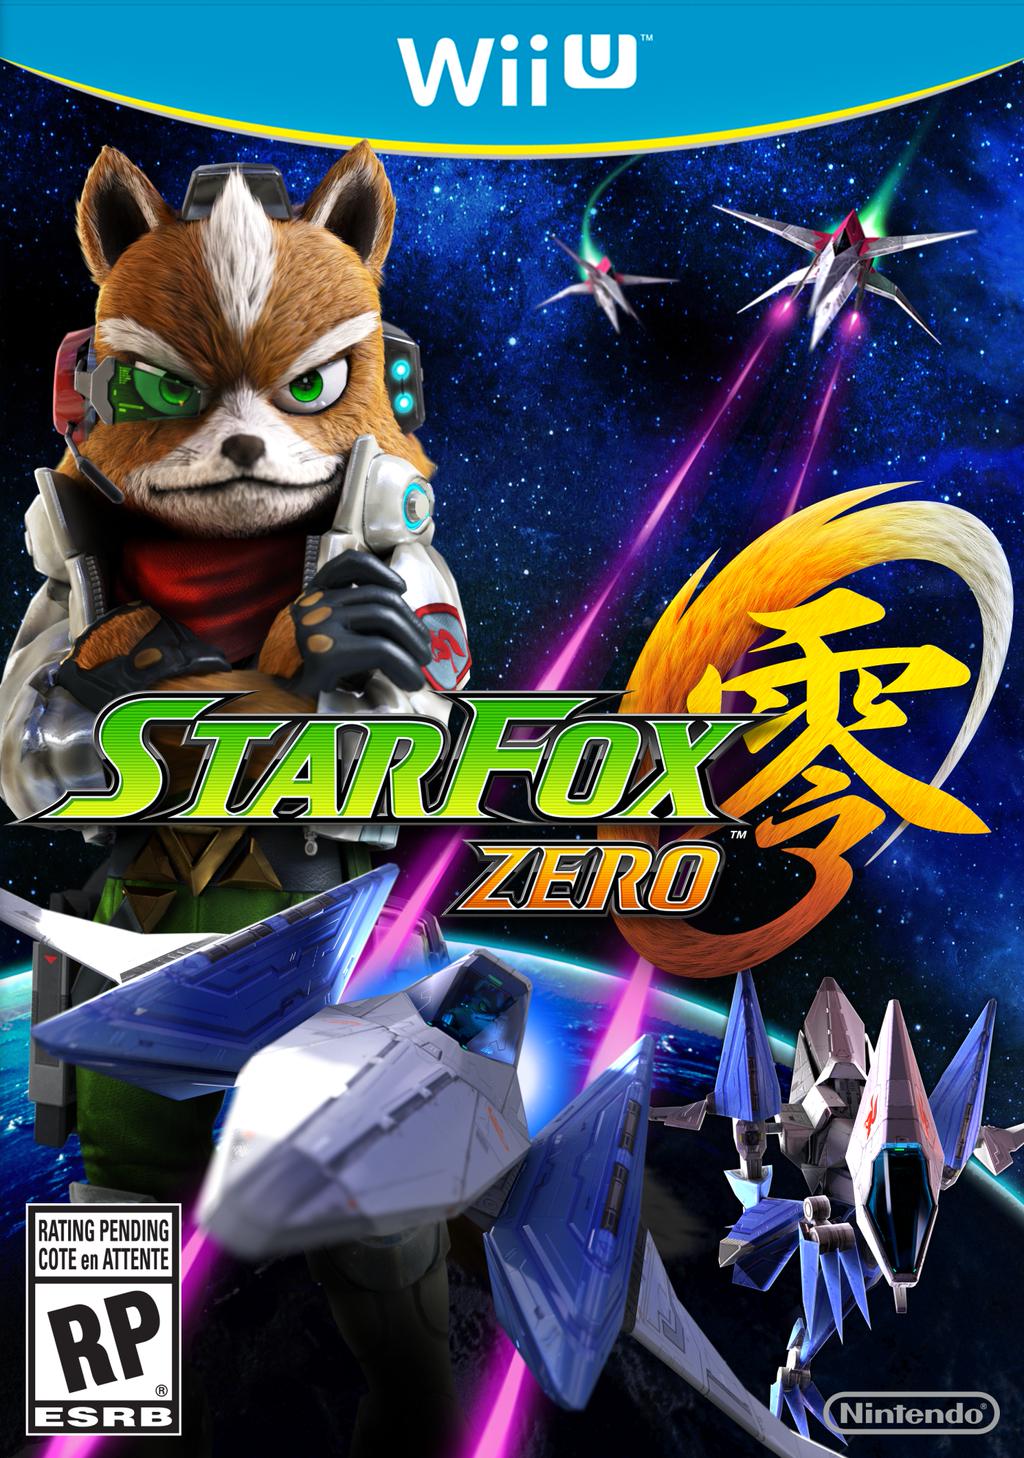 Star Fox Zero Review (Nintendo Wii U) - Official GBAtemp Review |  GBAtemp.net - The Independent Video Game Community